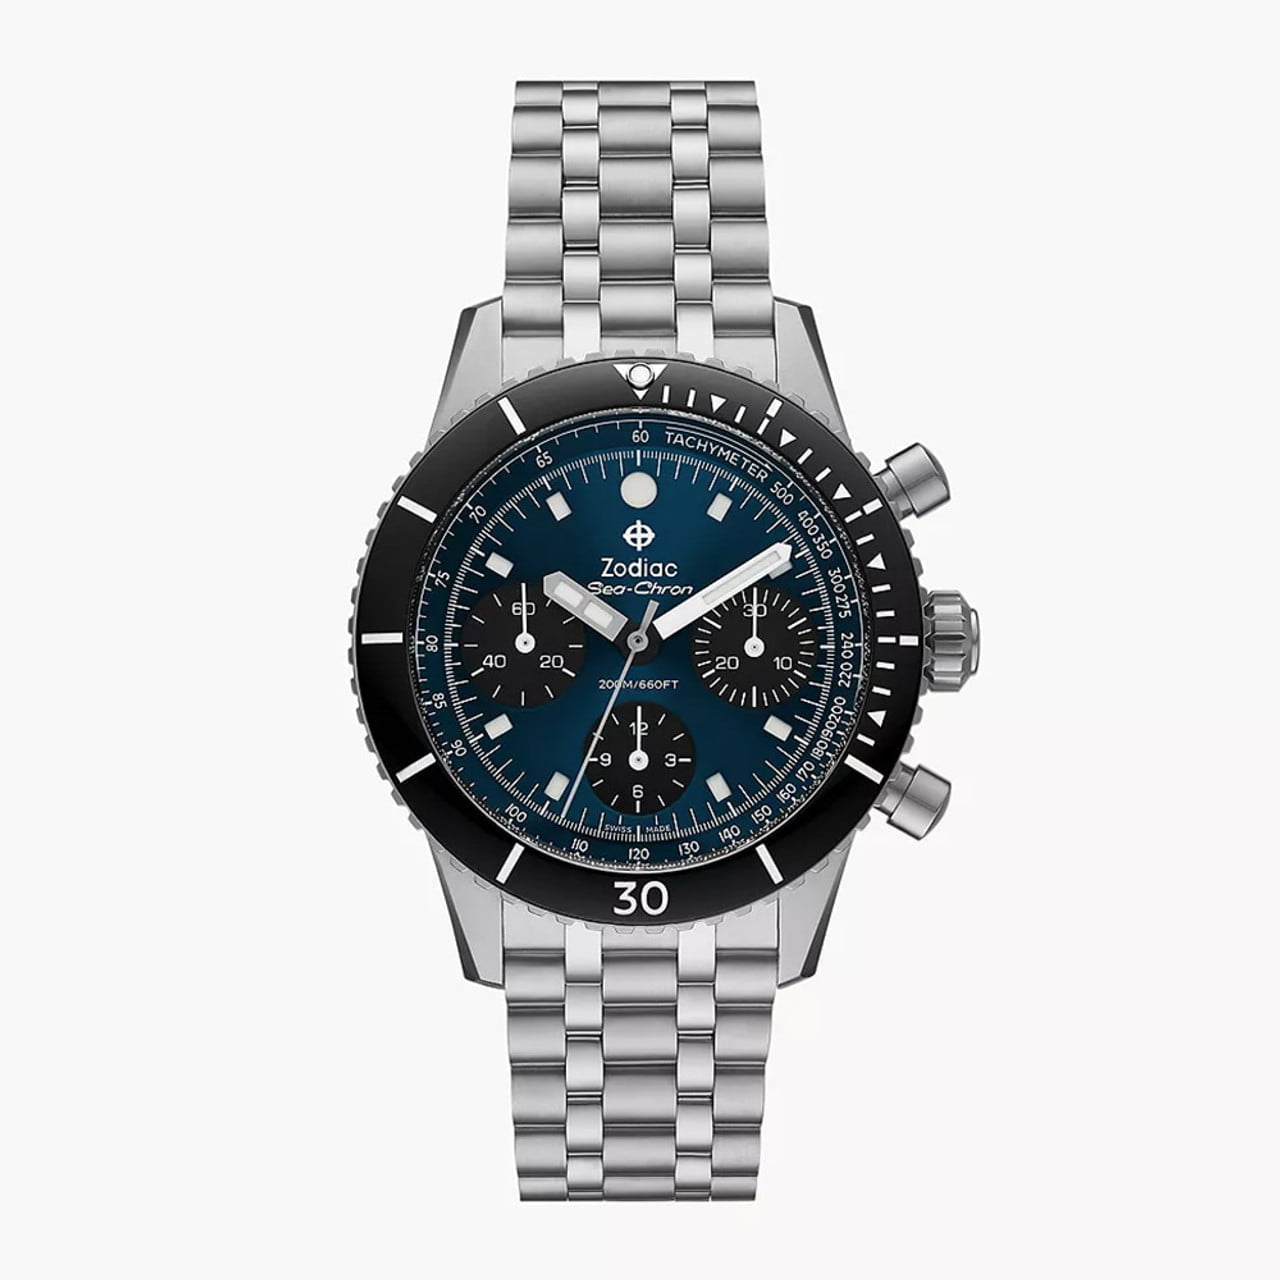 Zodiac Sea-Chron Automatic Chronograph in silver wristband.